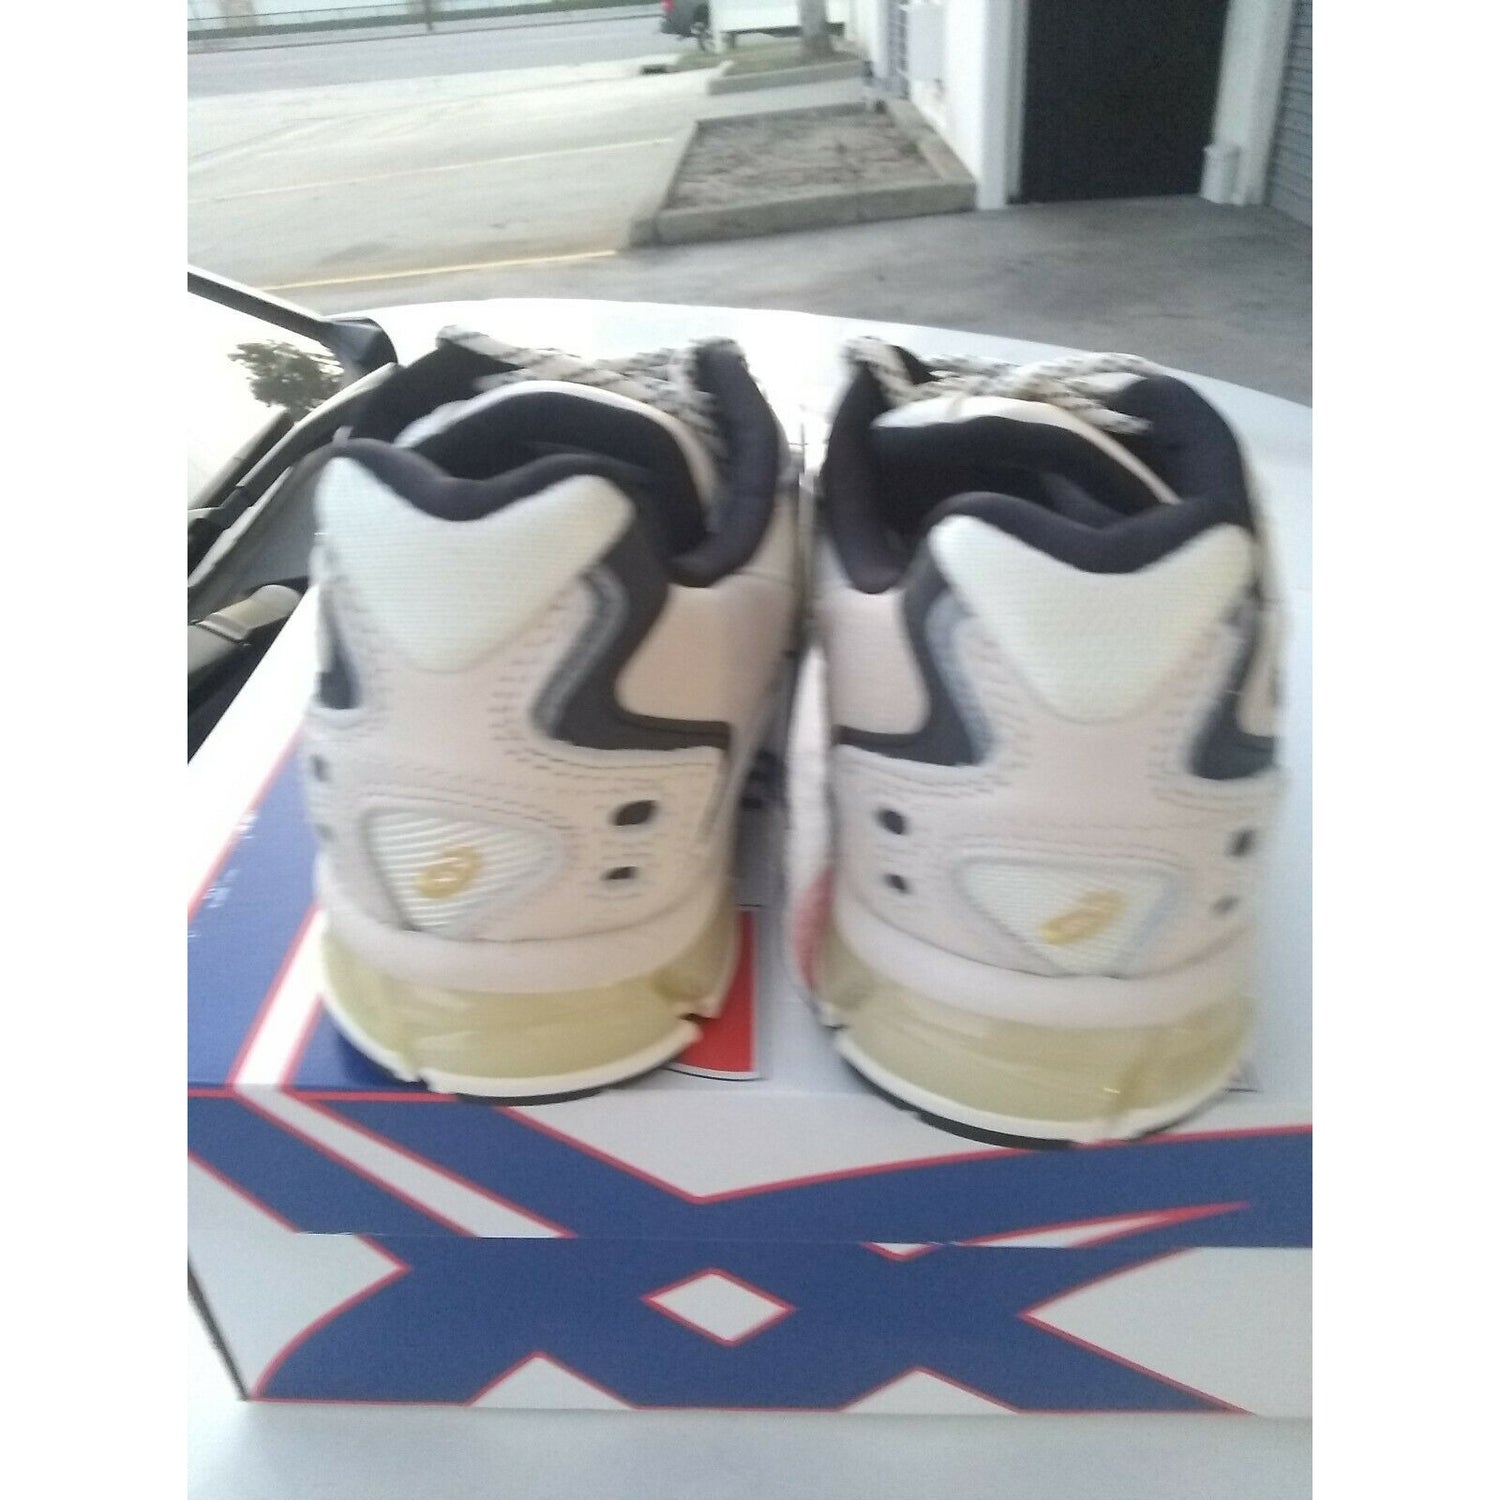 Asics Kayano 5 360 Cream Rich Gold Size 8.5 Men US running shoes